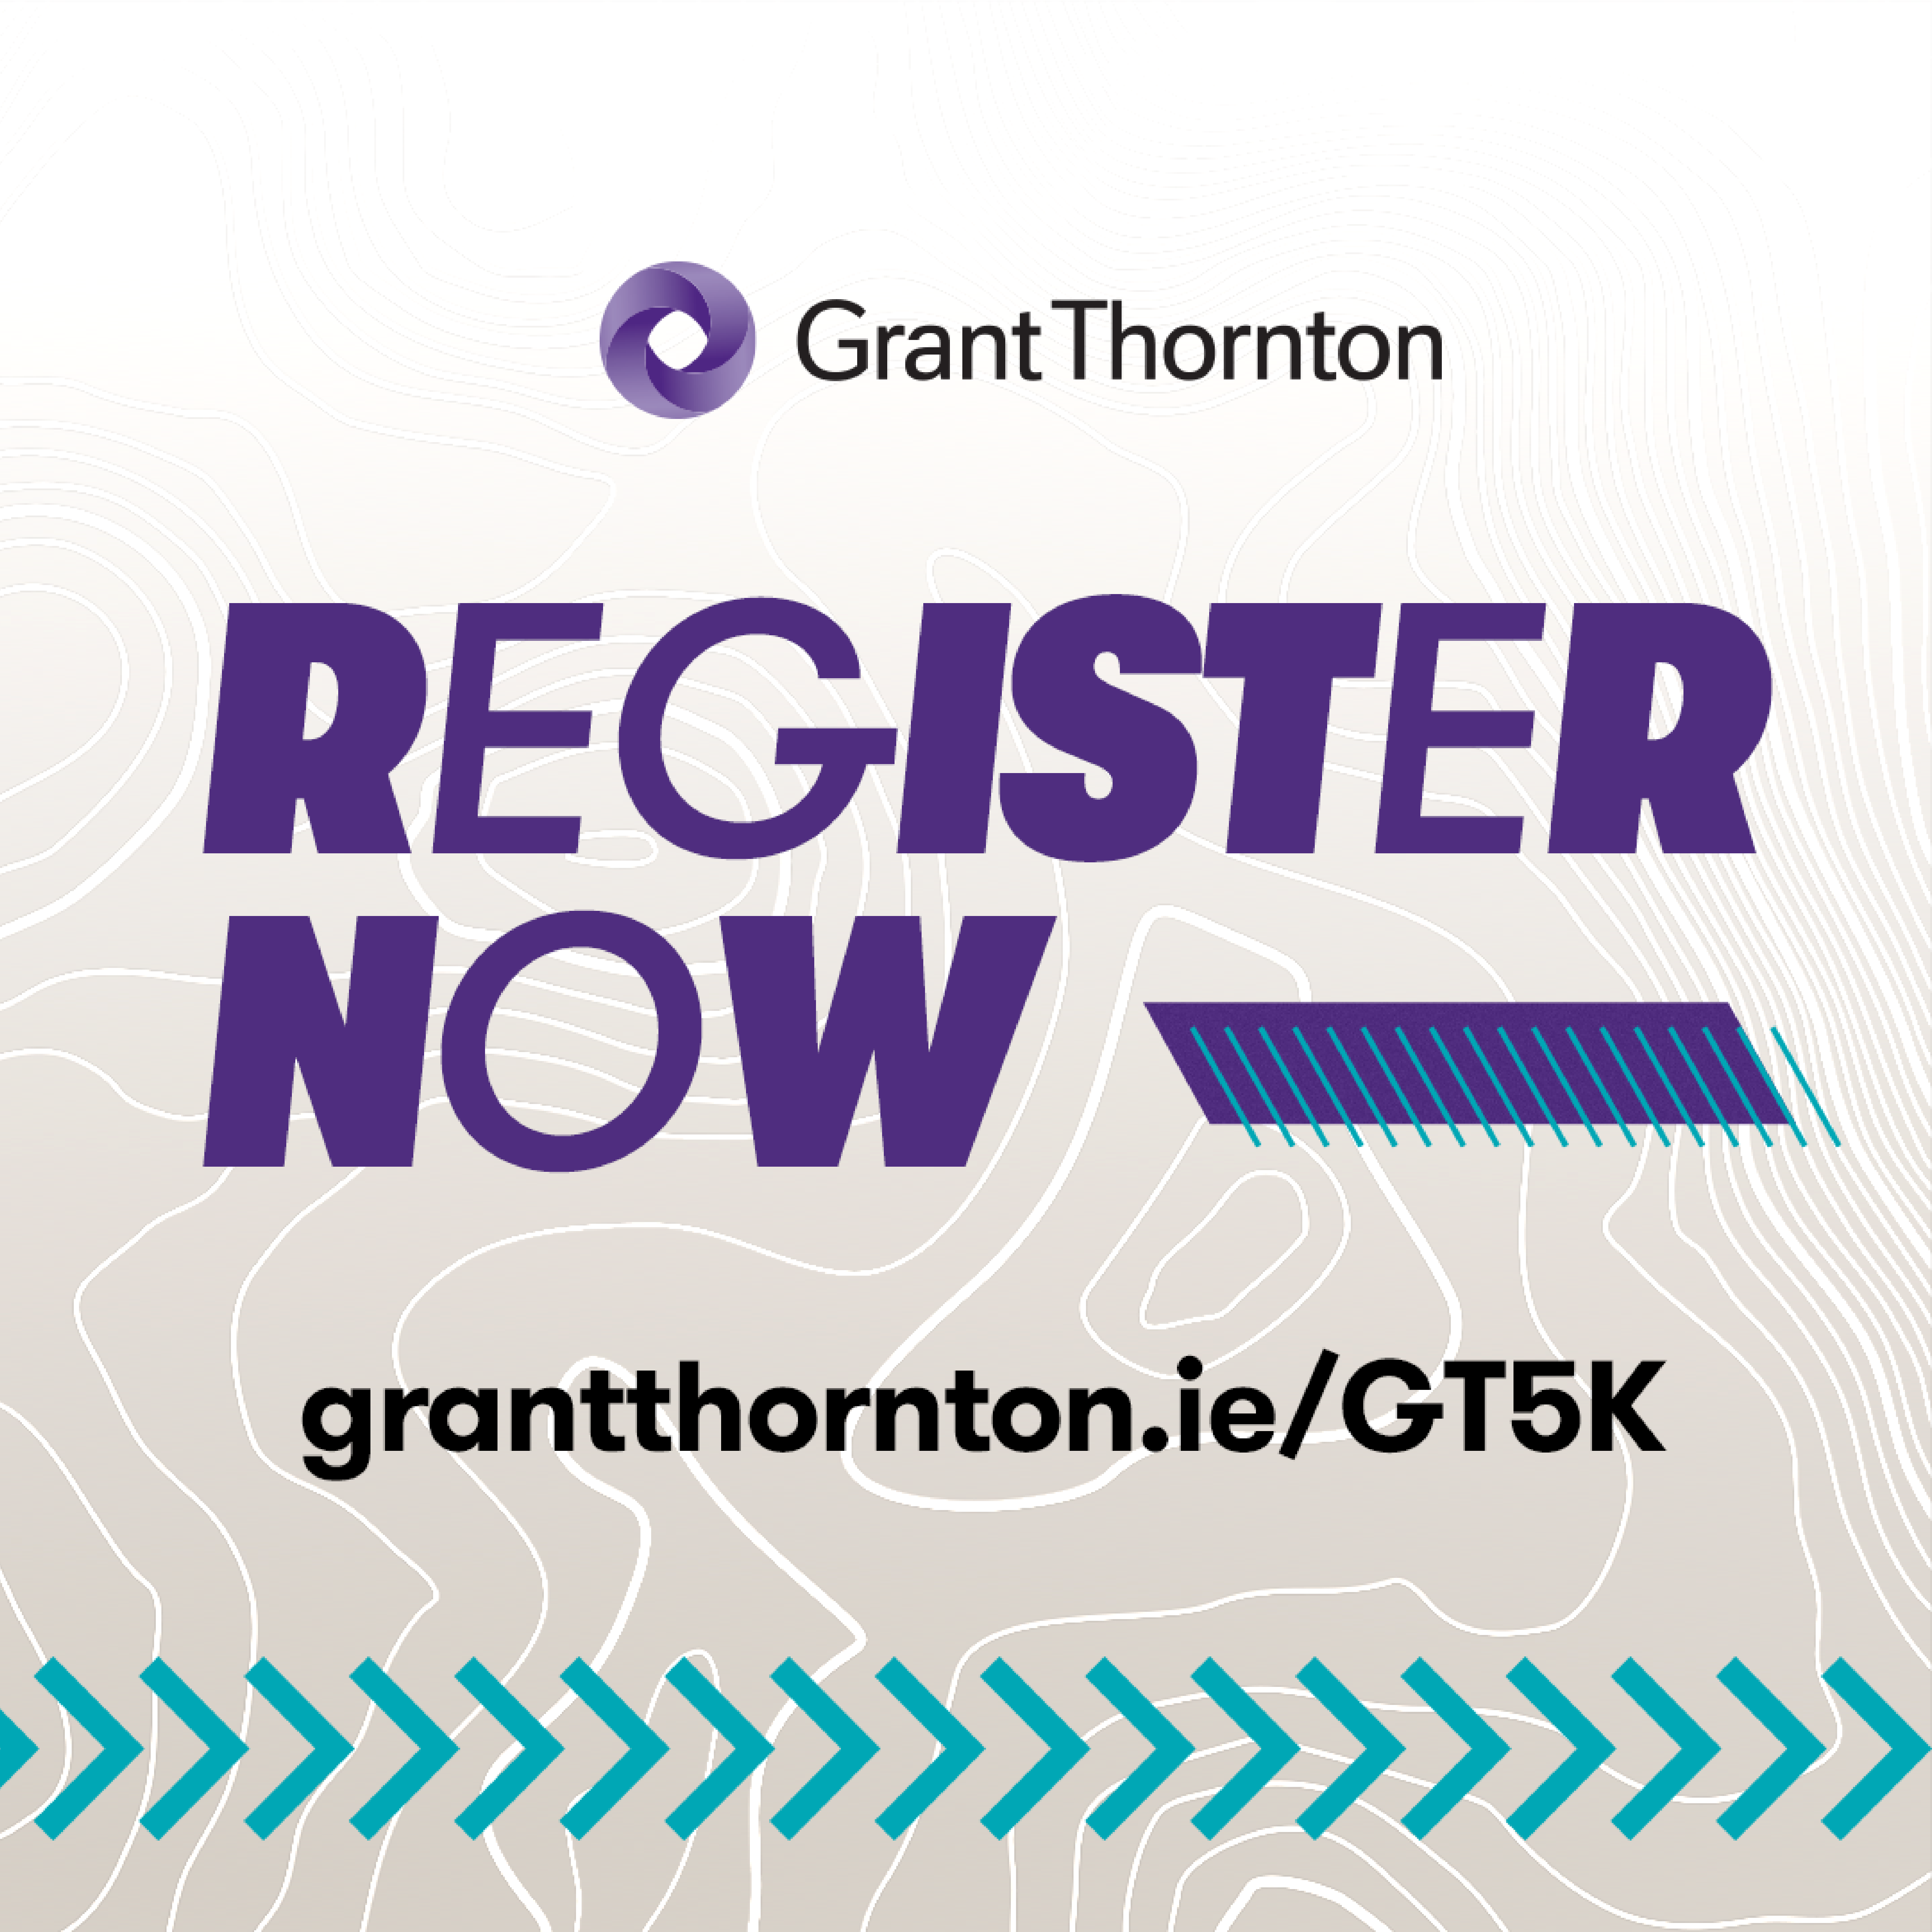 Grant Thornton’s GT5K series returns to Cork